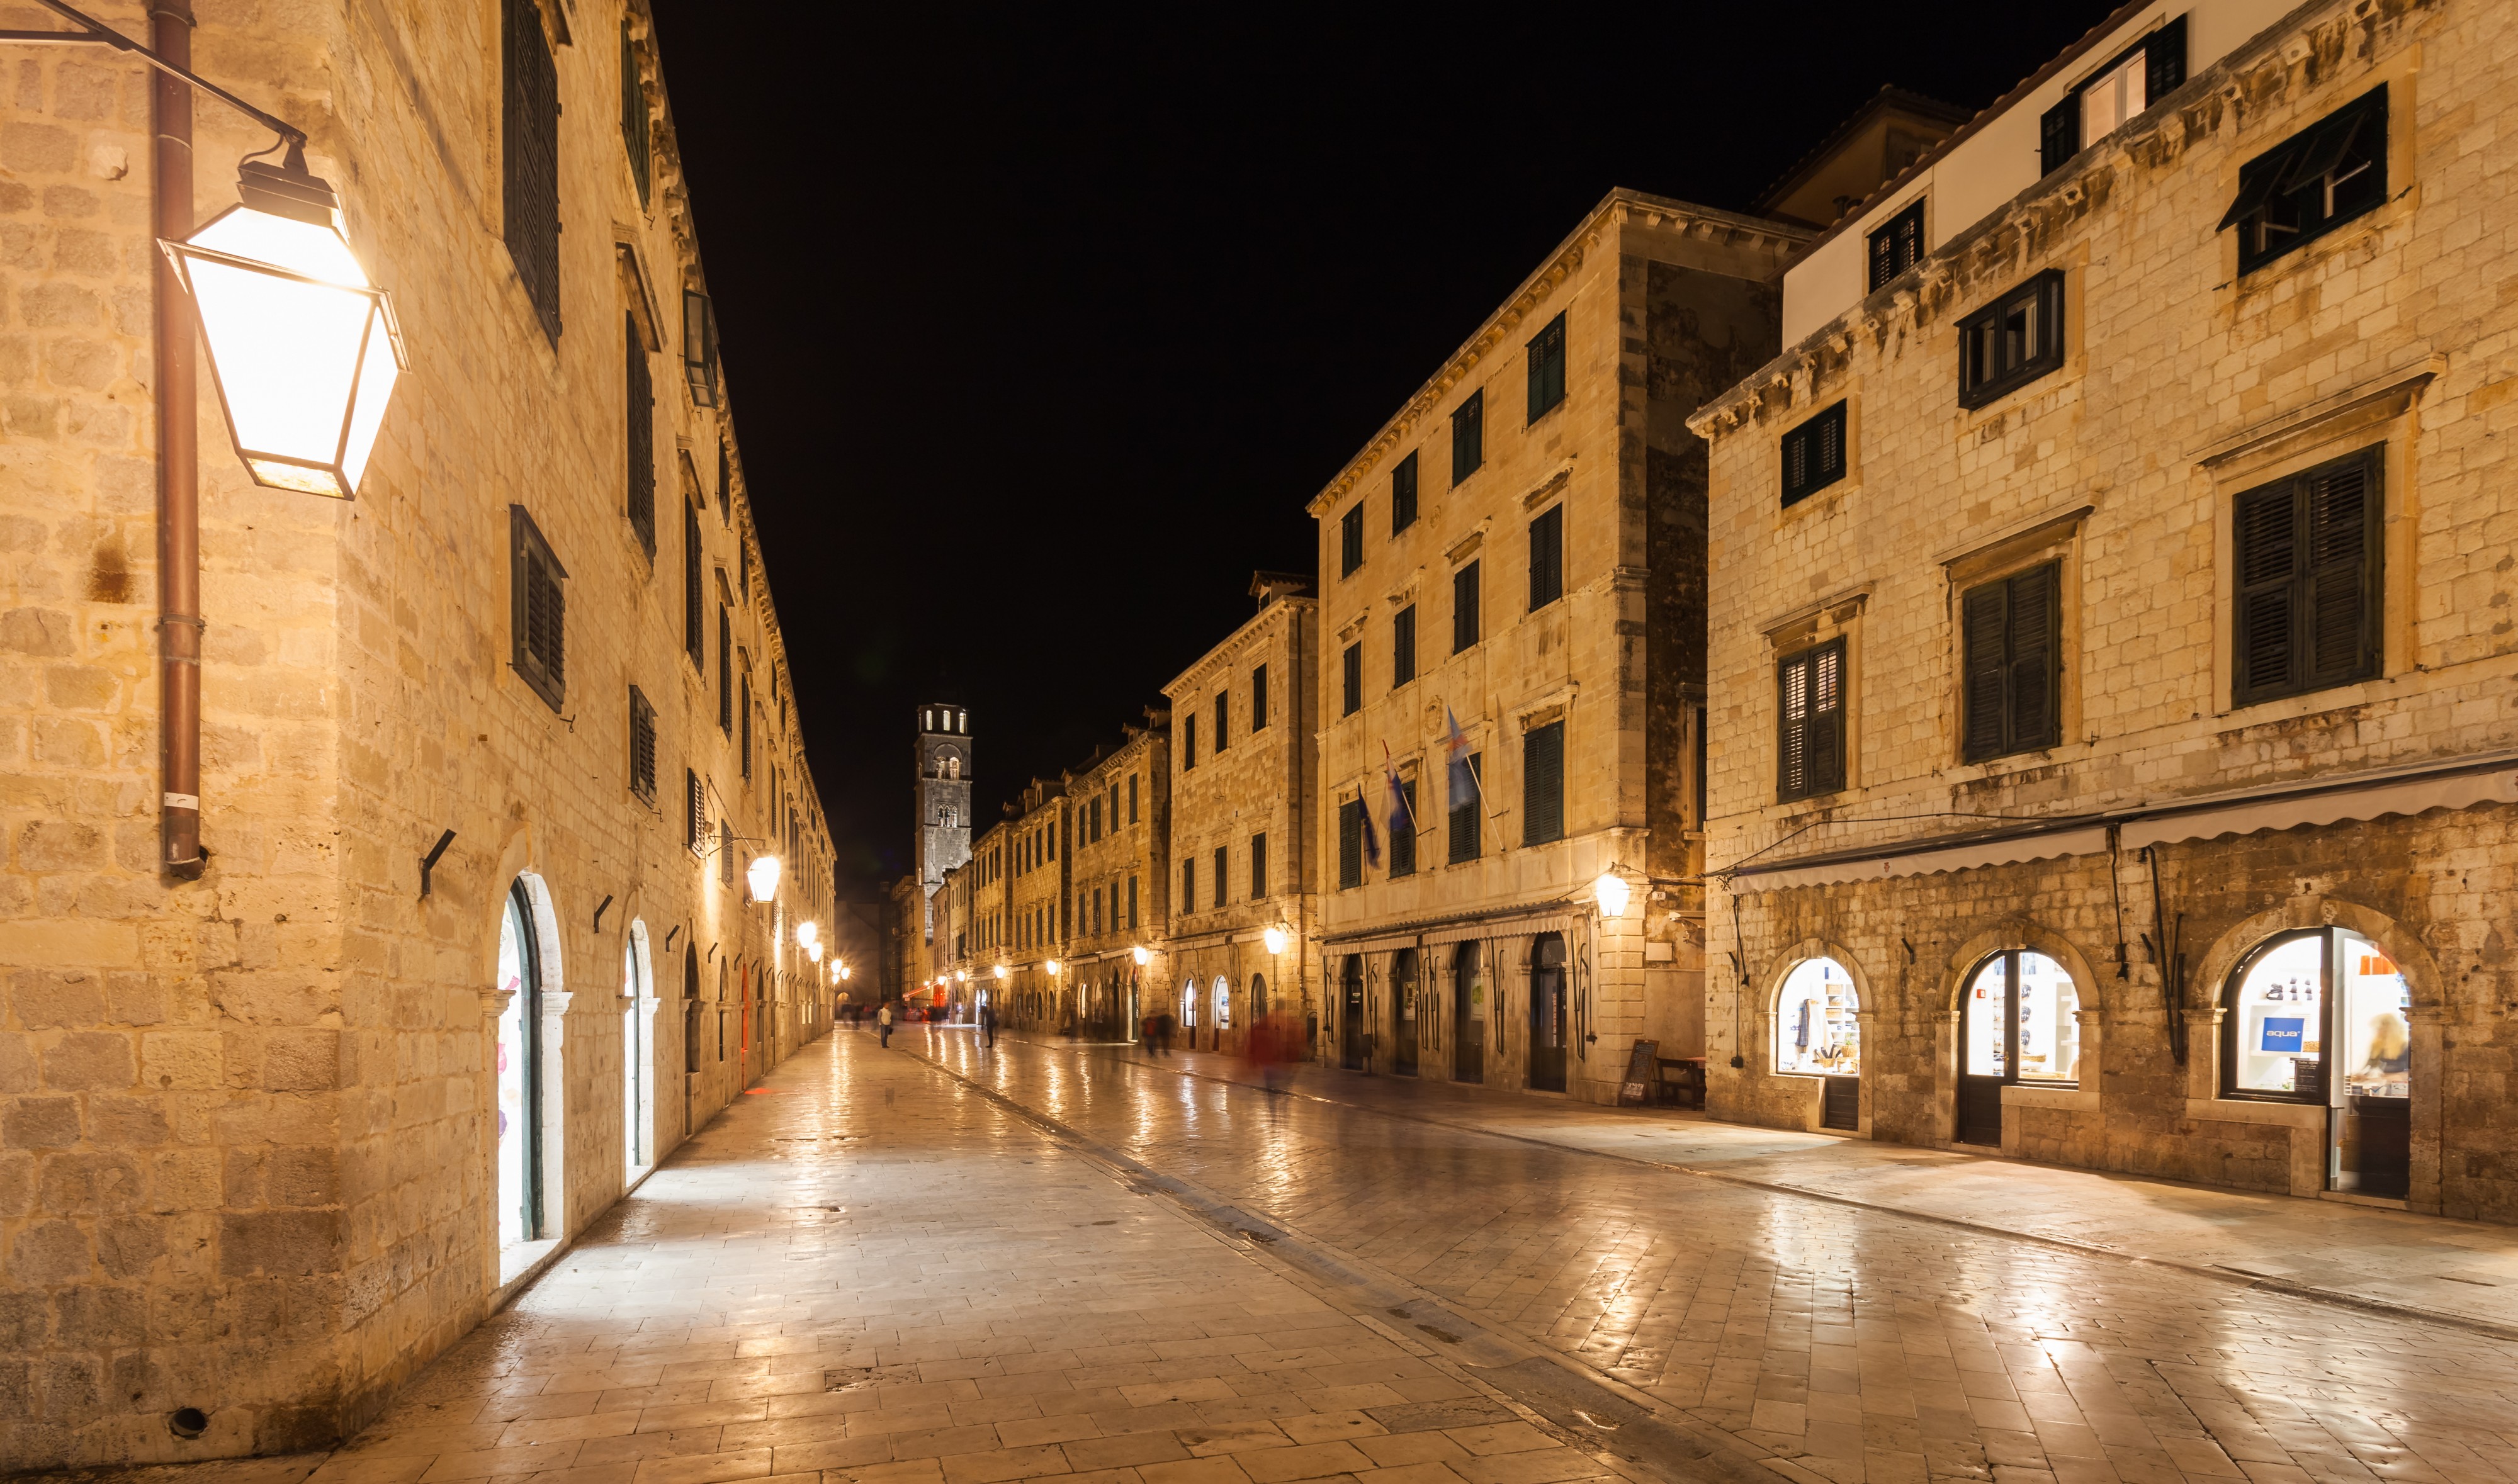 Casco viejo de Dubrovnik, Croacia, 2014-04-13, DD 12